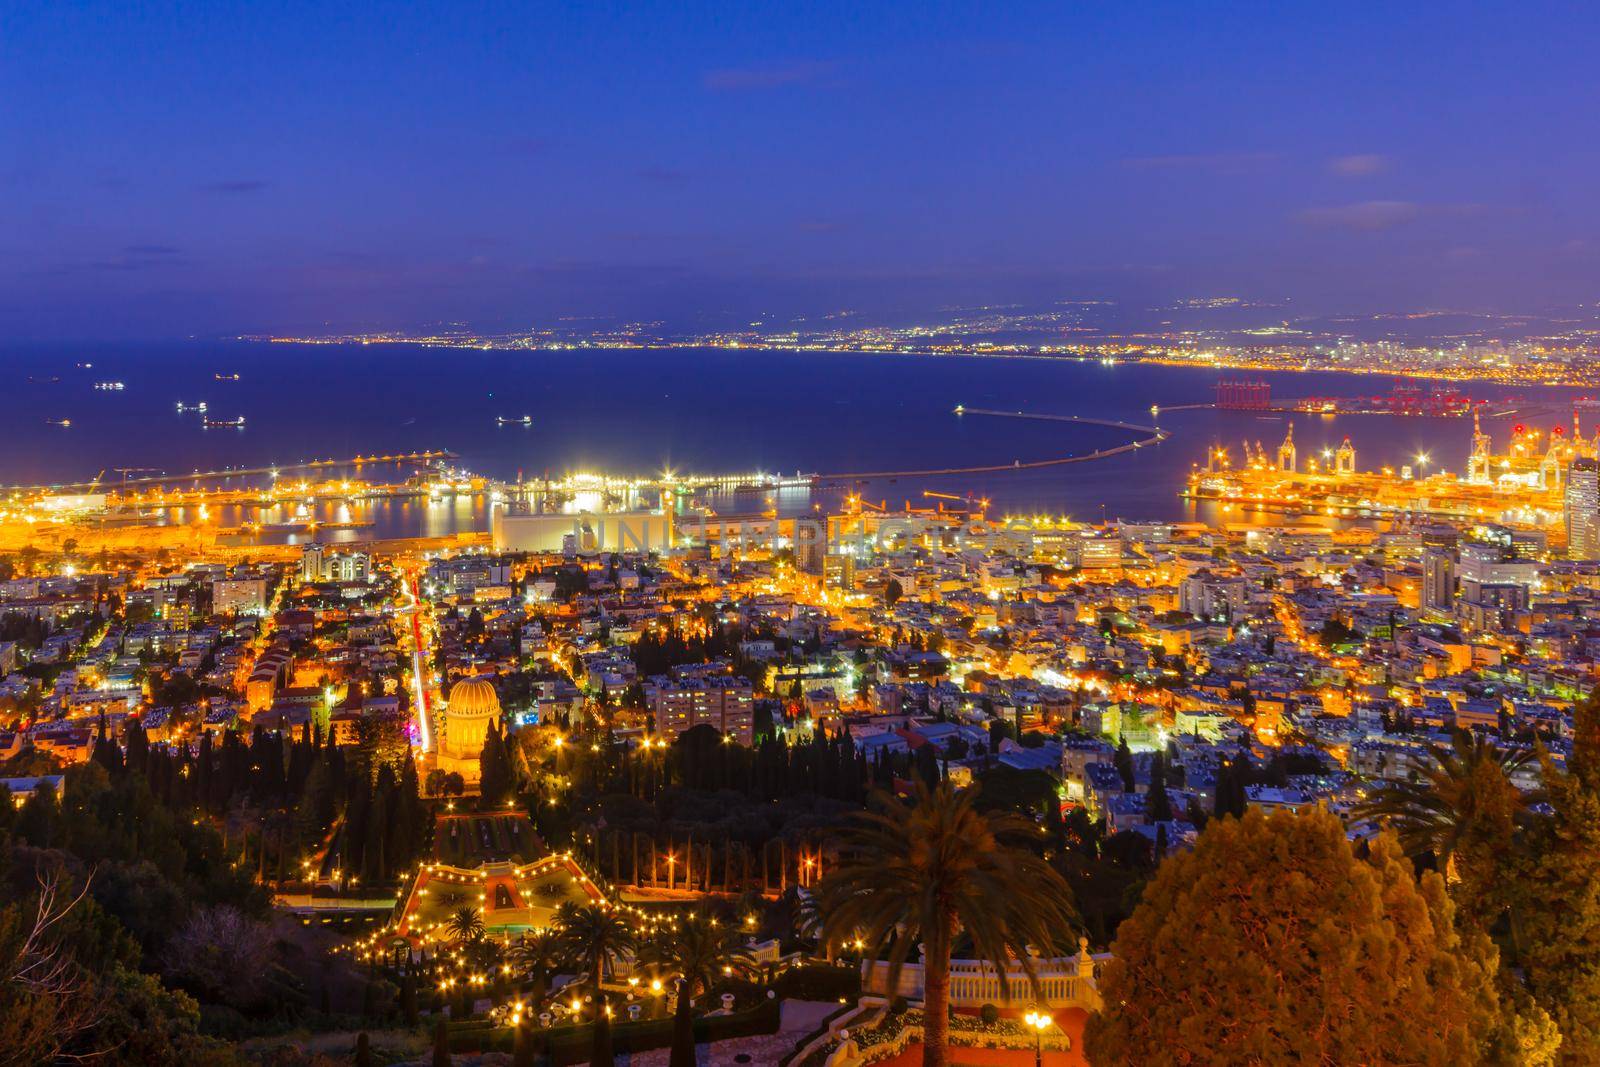 Night view of Bahai Shrine, gardens, downtown and port, Haifa by RnDmS